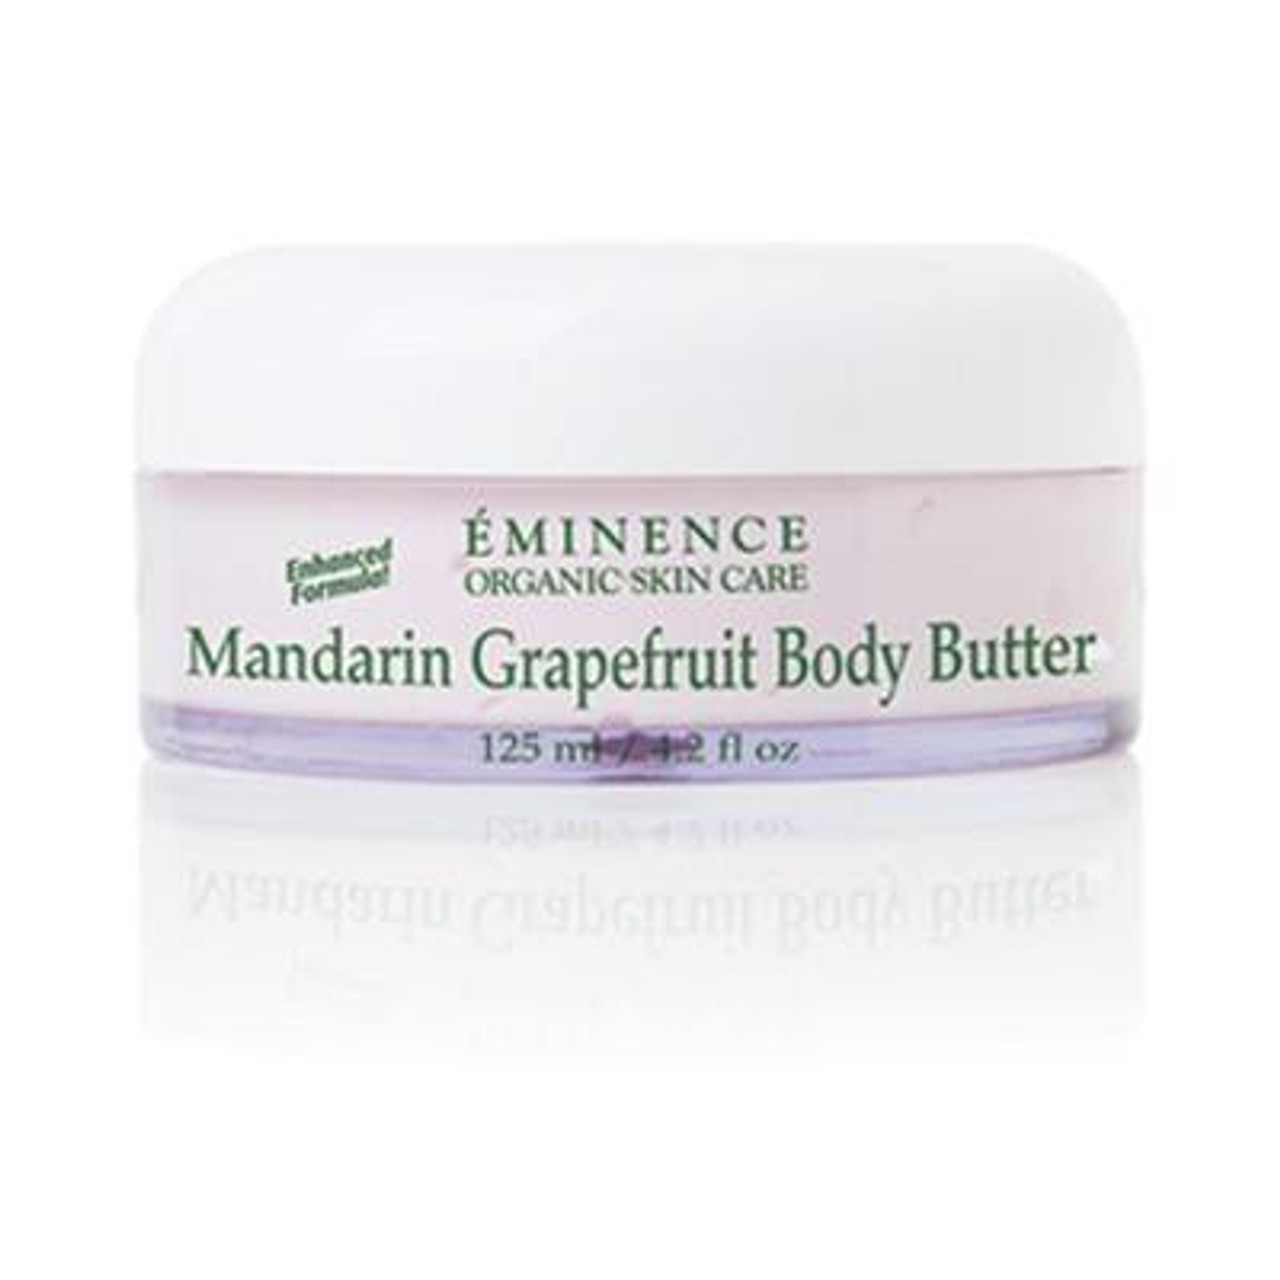 Eminence Mandarin Grapefruit Body Butter - 4.2 oz